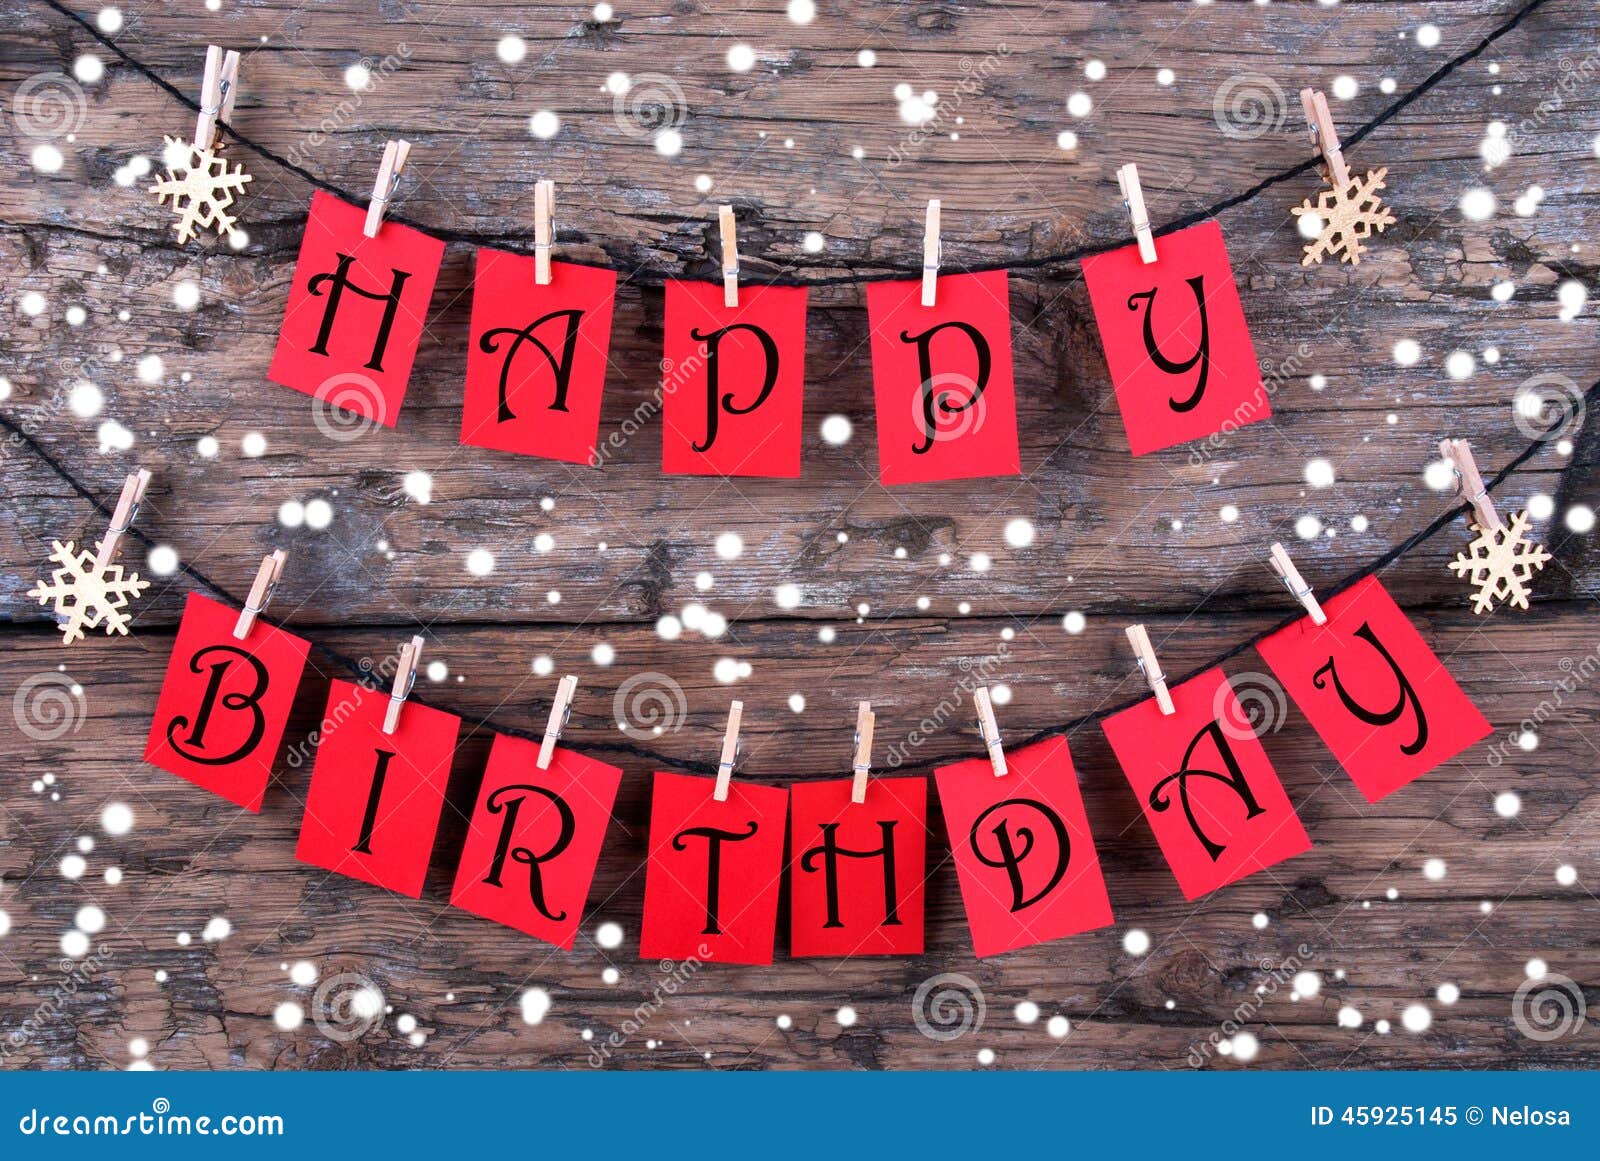 Birthday Wishes In Cake Cream And Fruits Stock Image | CartoonDealer ...